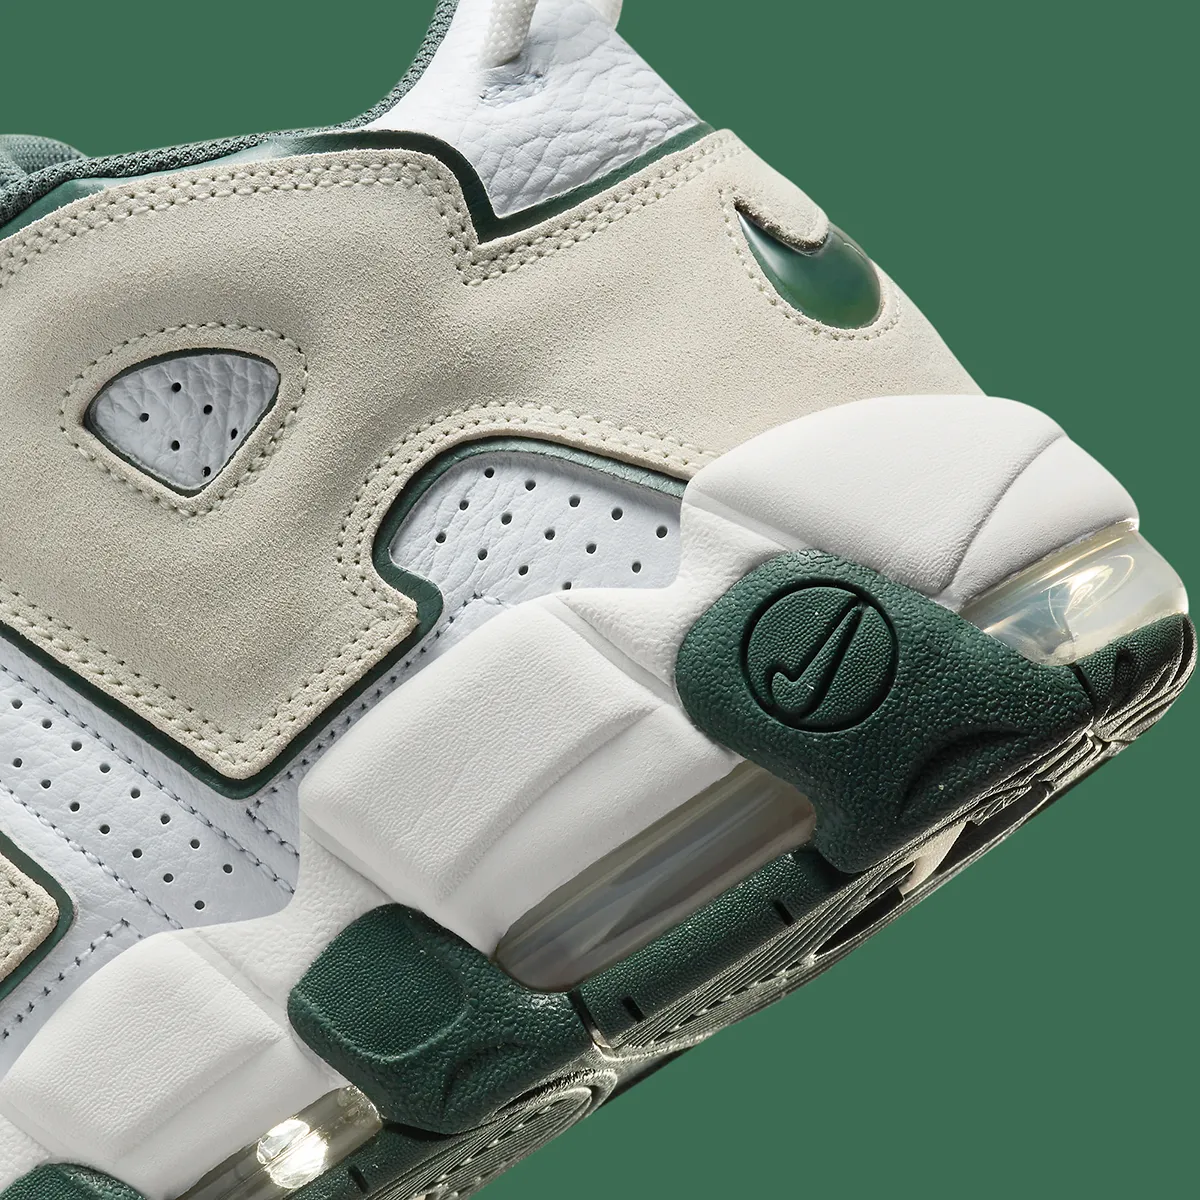 La Nike Air More Uptempo "Vintage Green" ravive la nostalgie du basket-ball des années 90